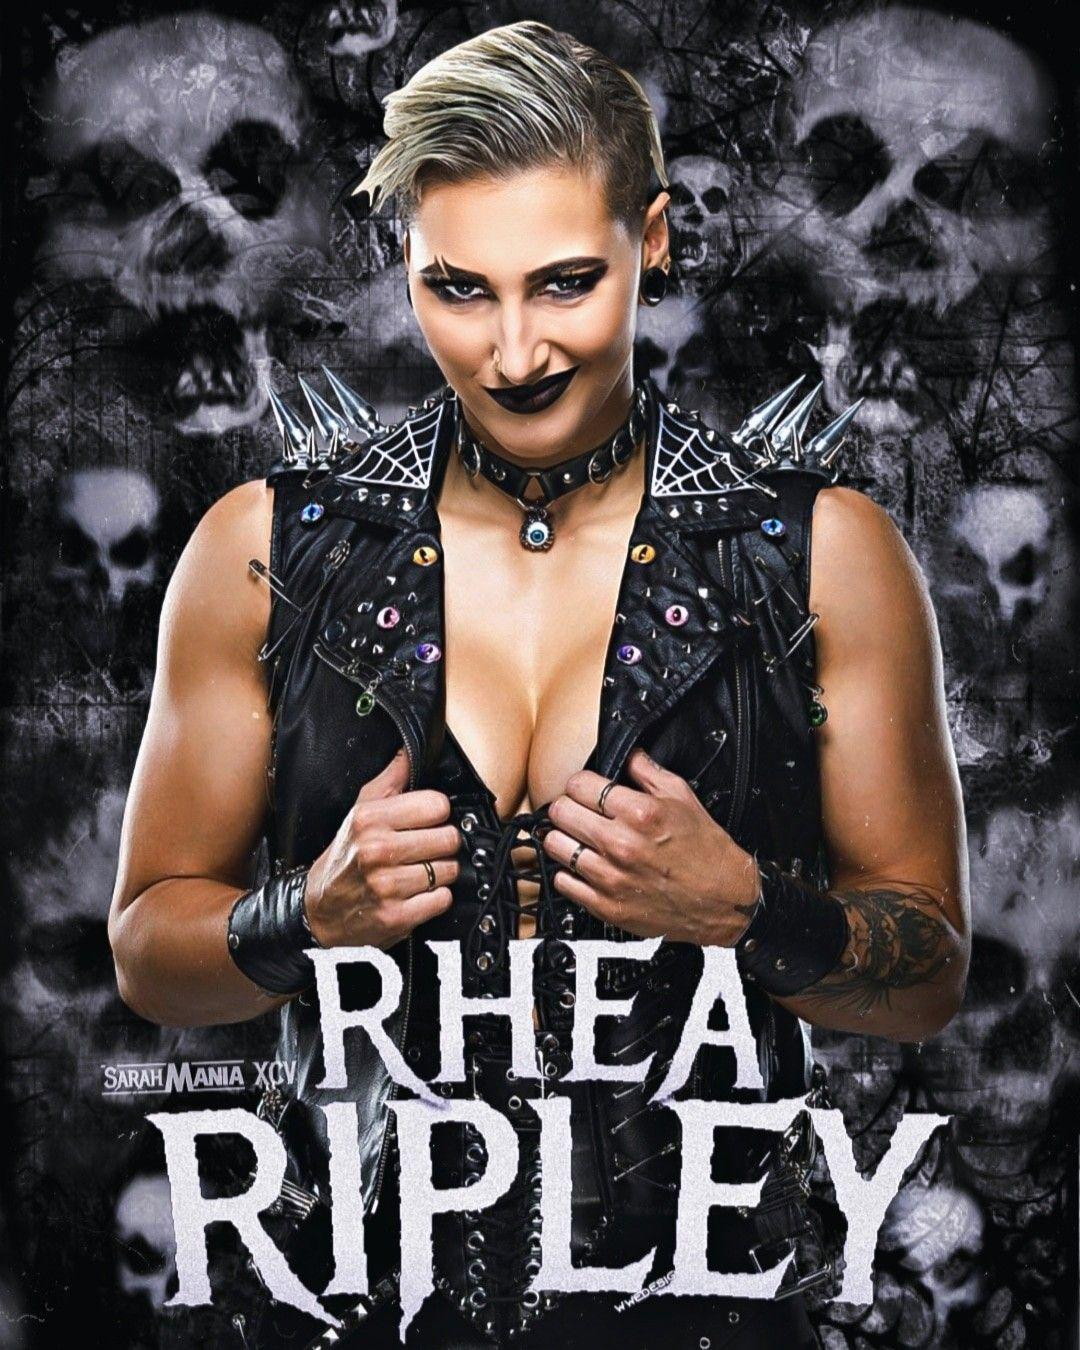 New wallpaper design featuring WWEs Rhea Ripley hope you all like it   rWWE